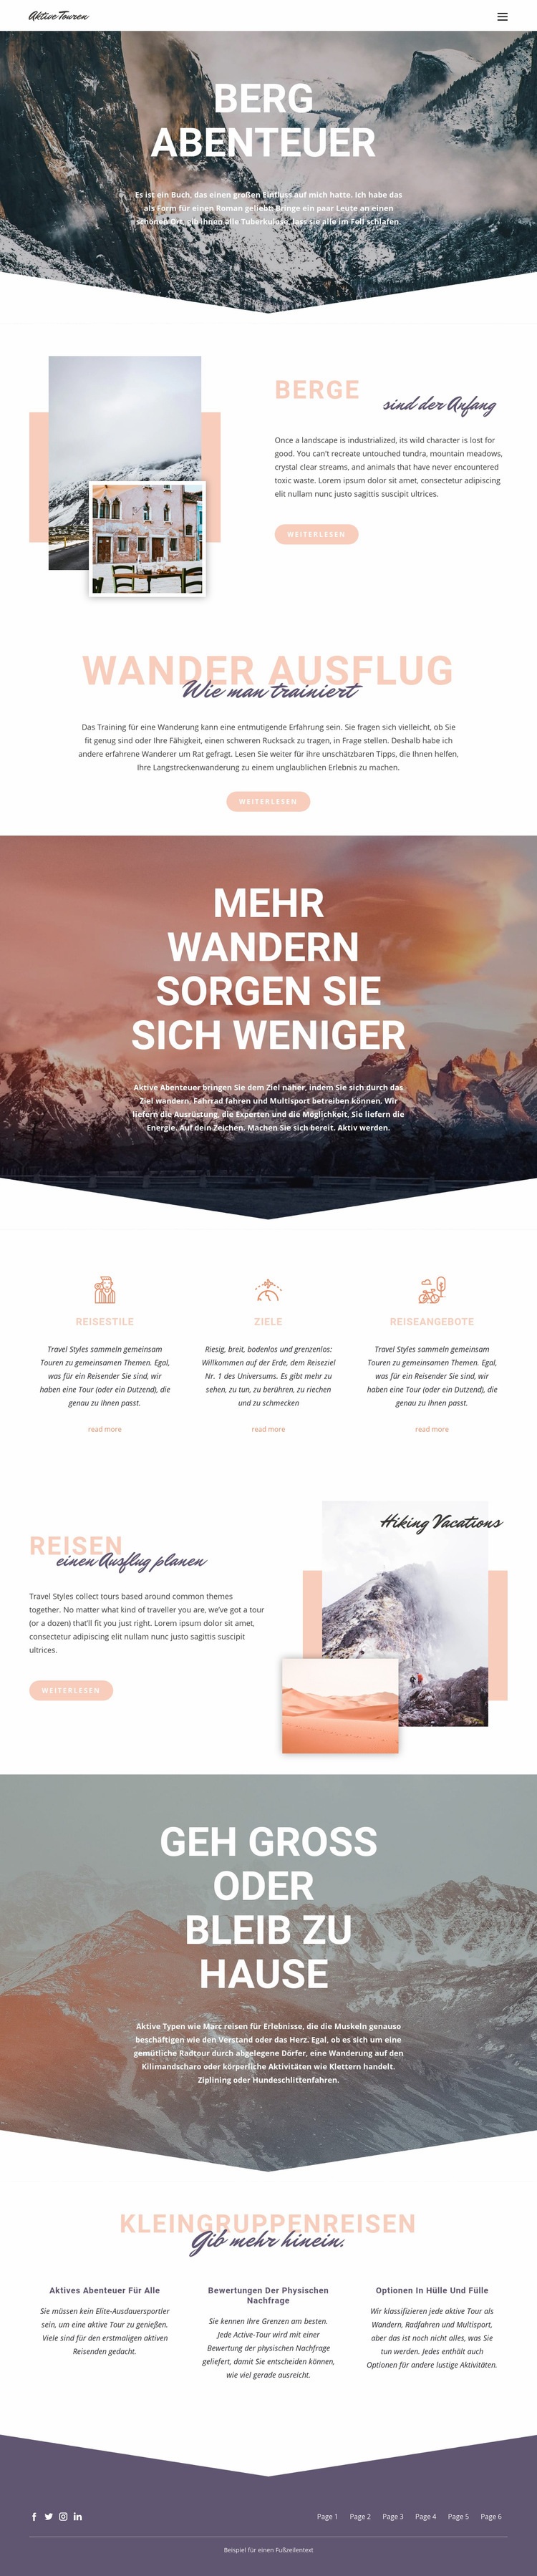 Bergabenteuer Website design